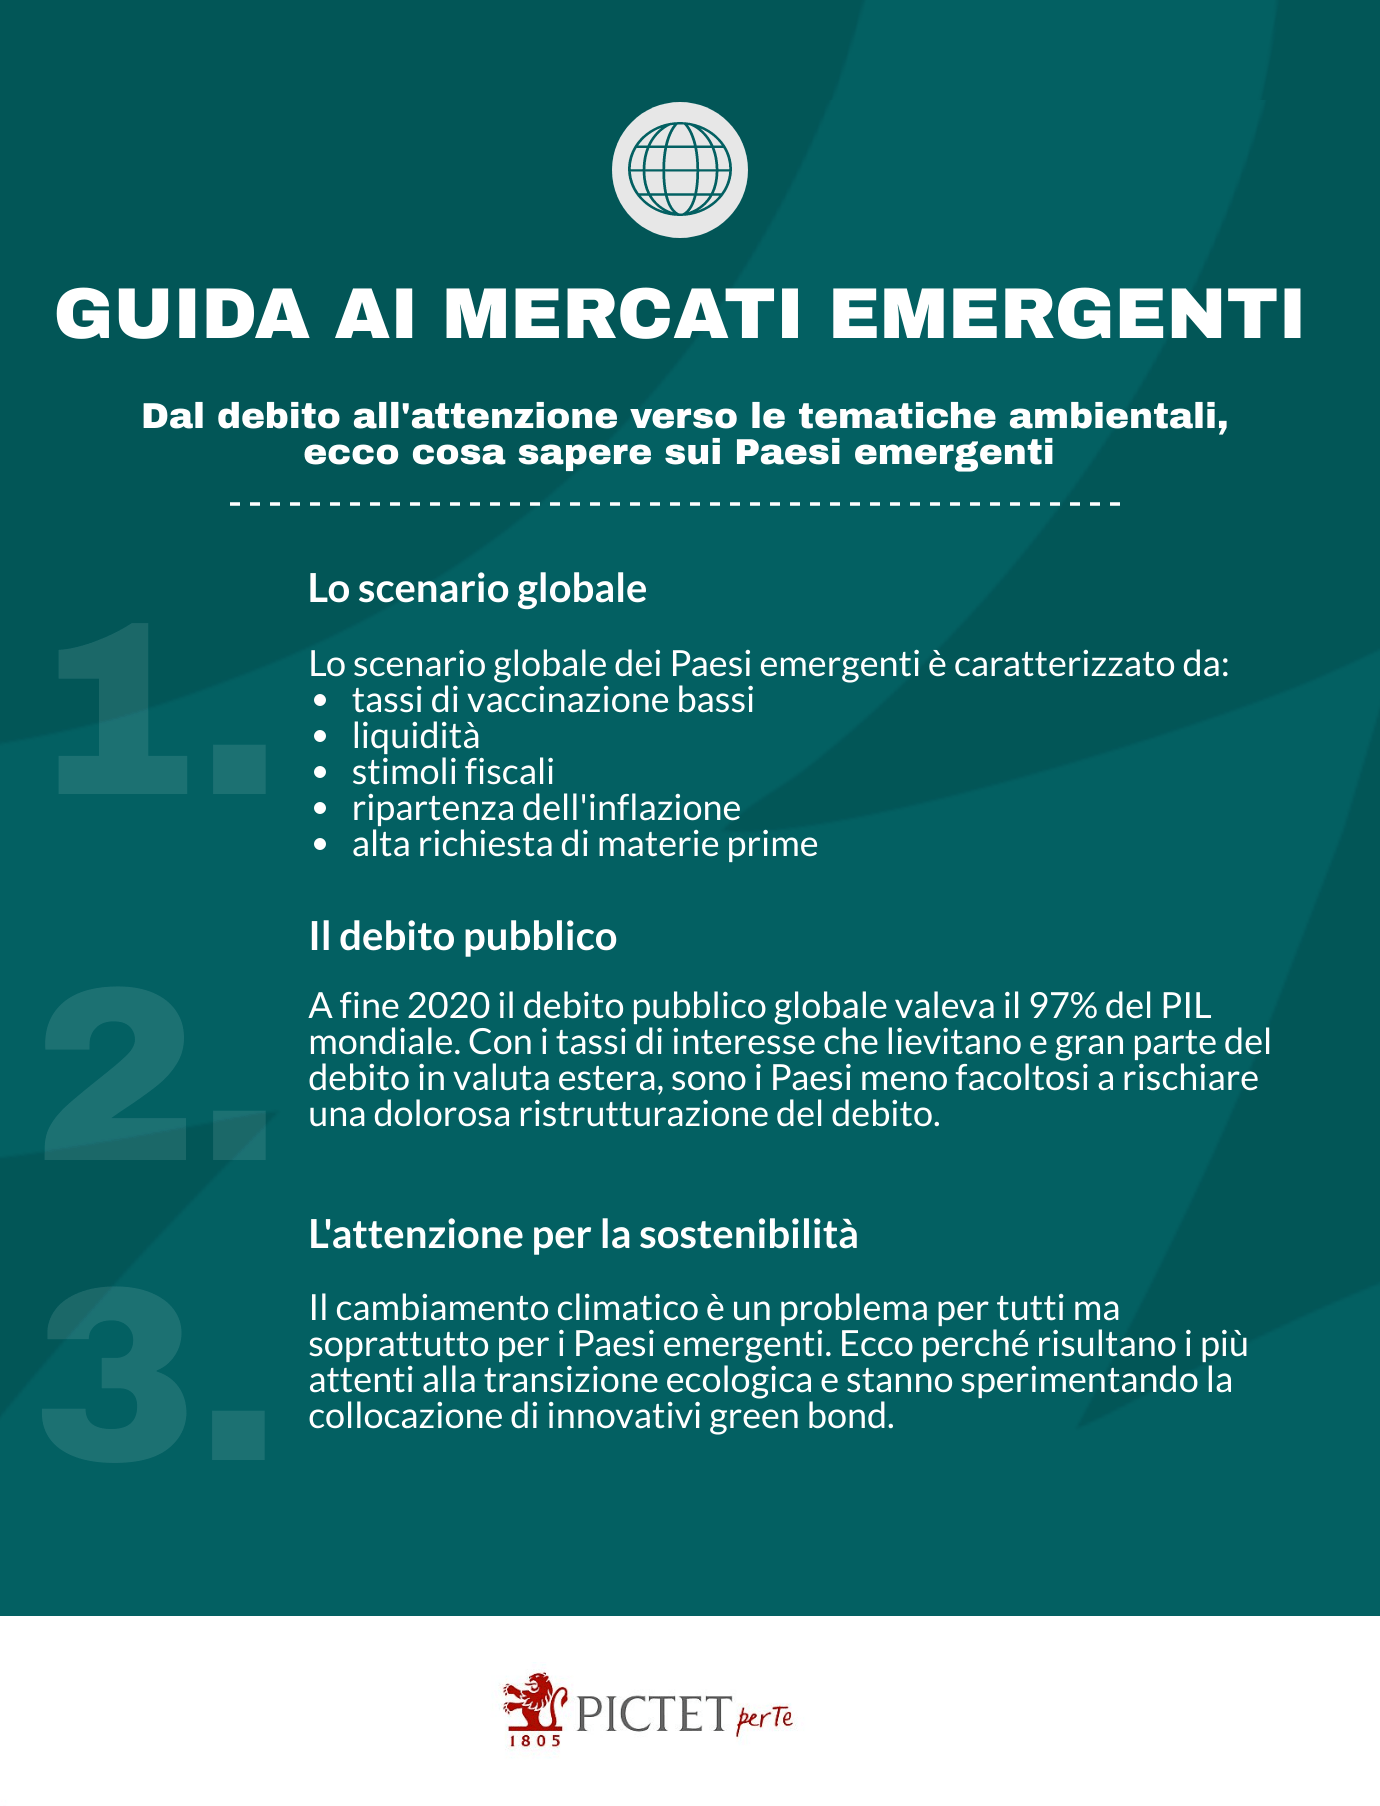 Pictet_GuidaFinanza_Mercati_emergenti_20211126